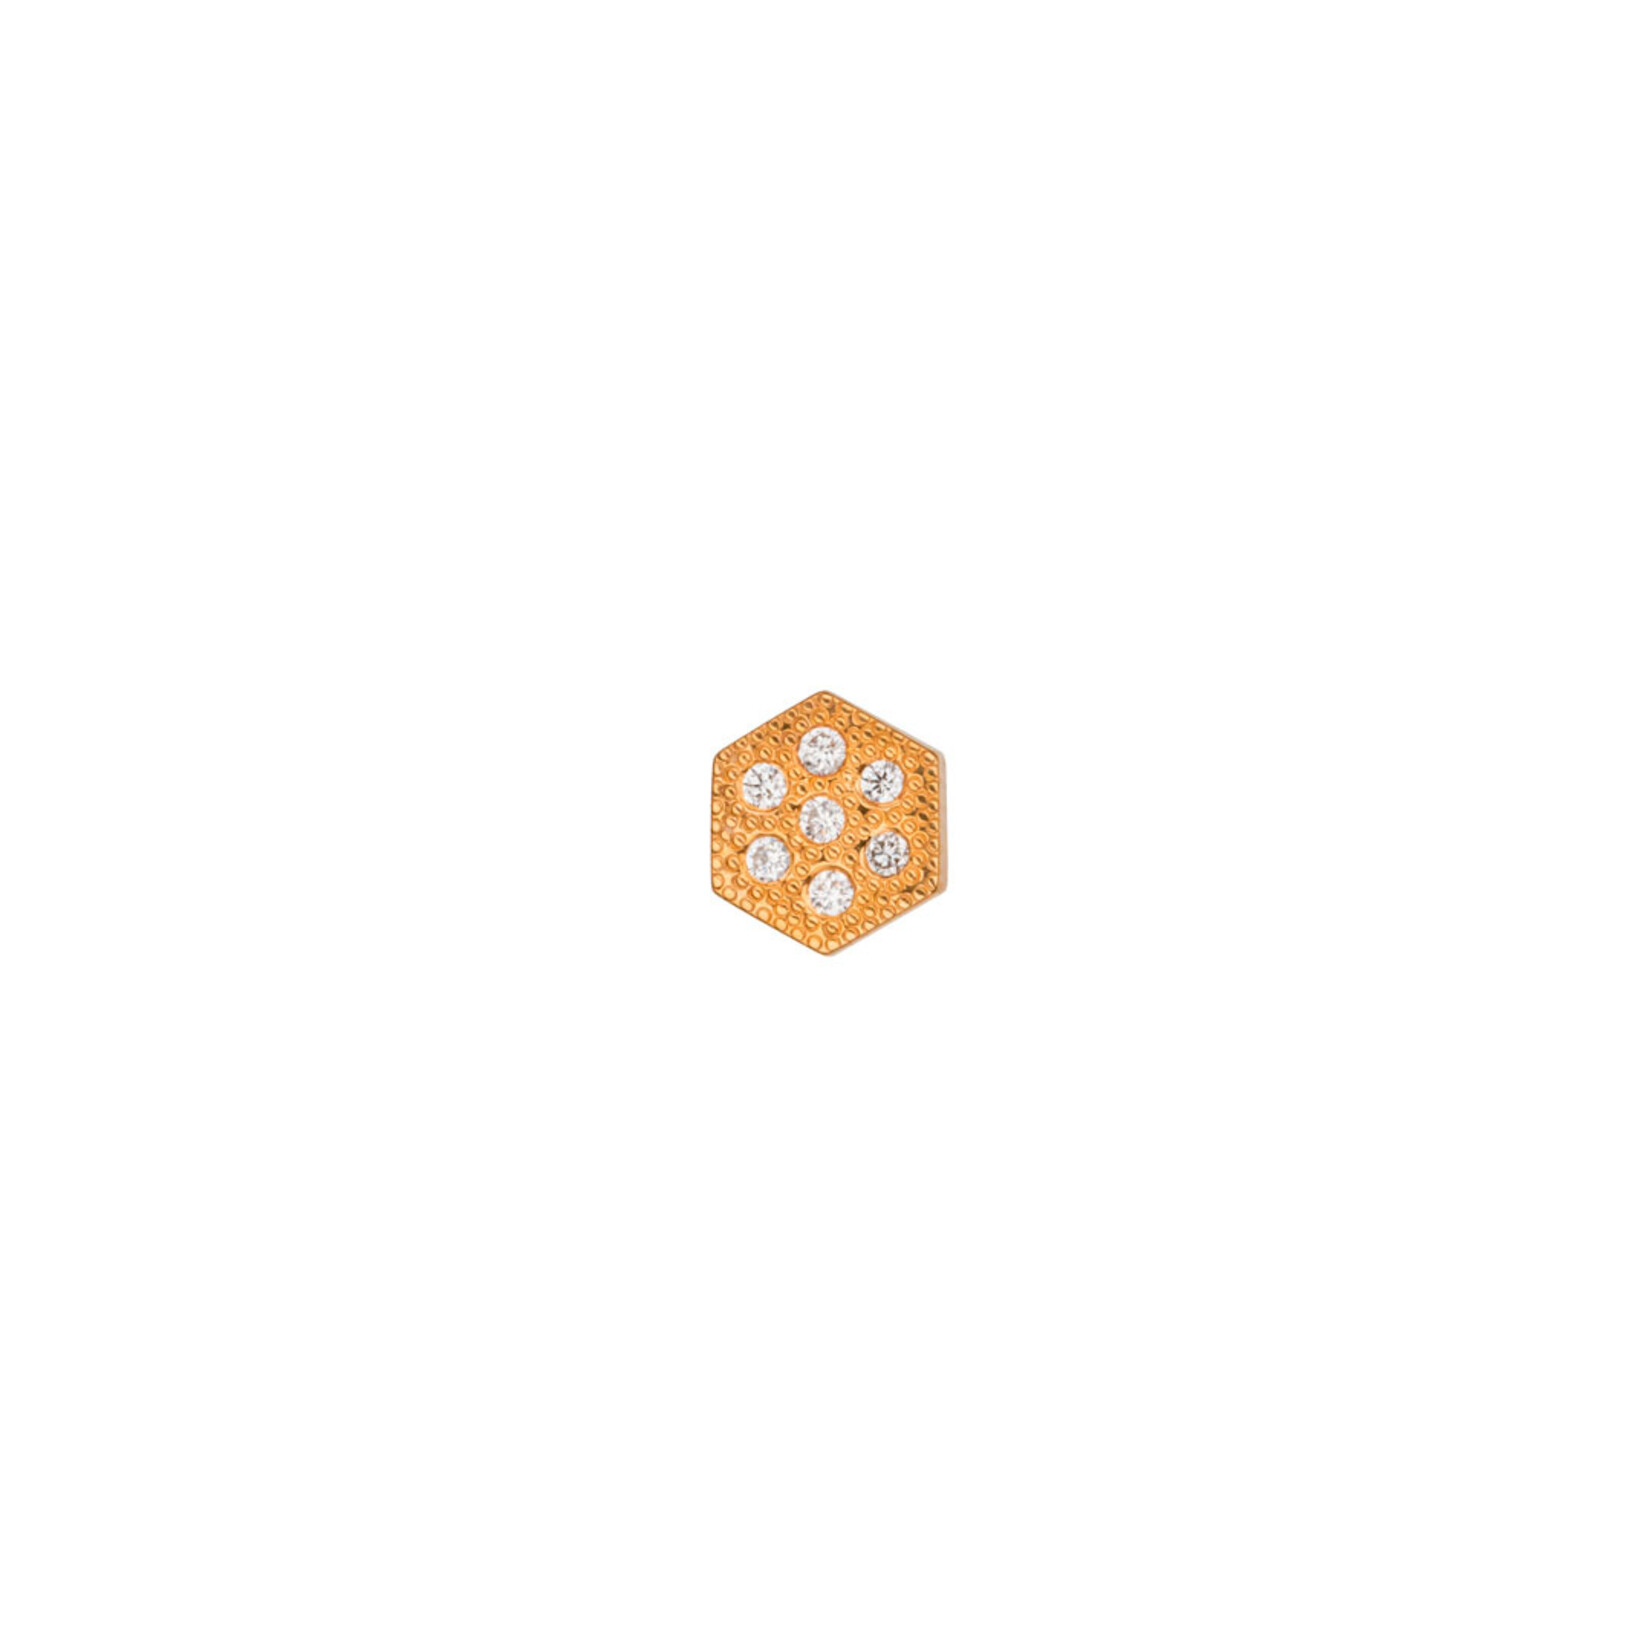 BVLA BVLA "Pave Hexagon" threaded end with 7x 1.0 VS1 diamonds